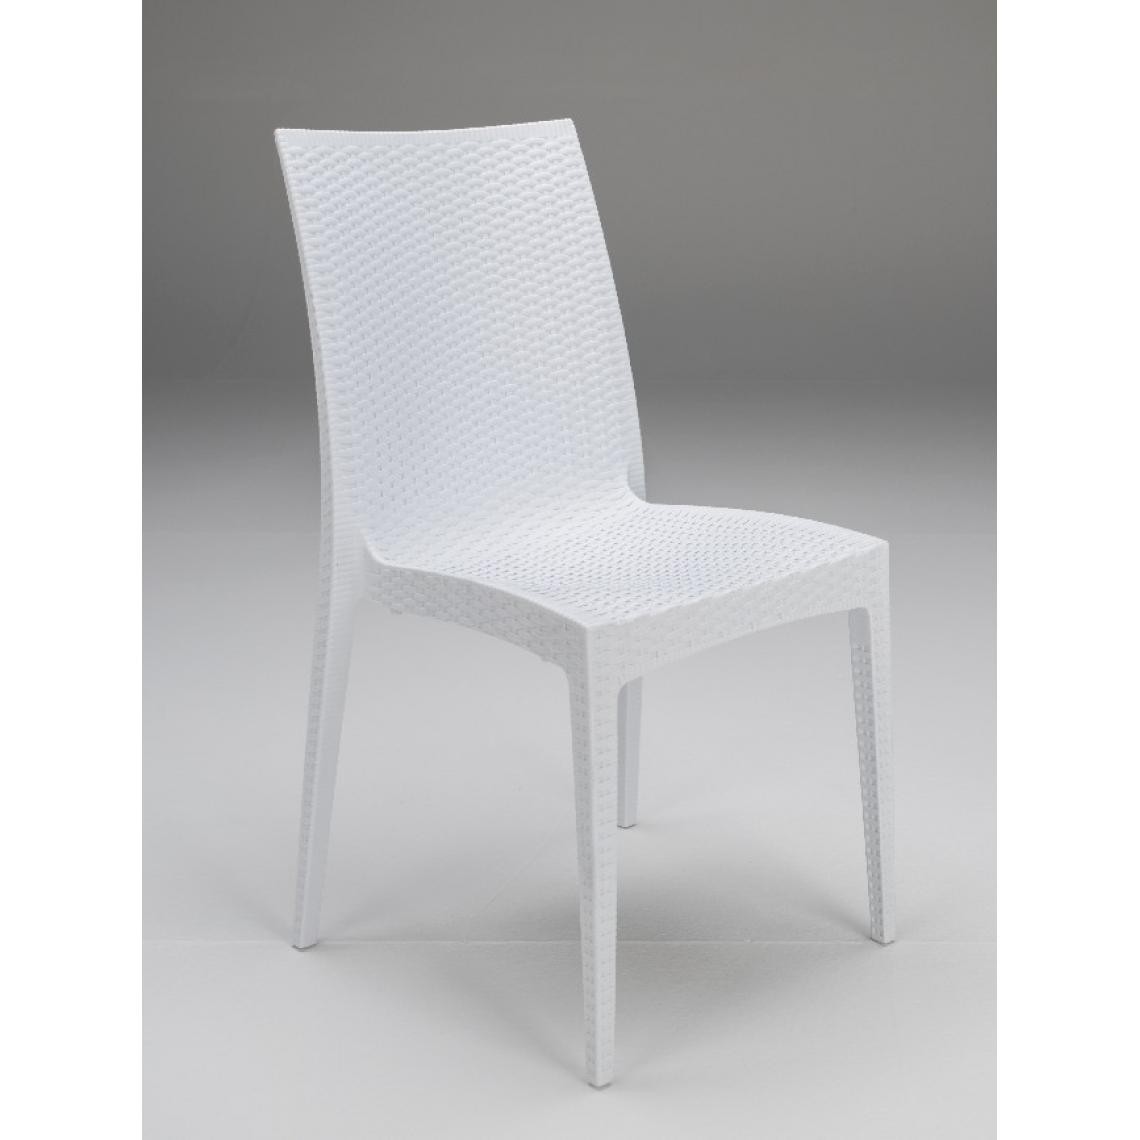 Homemania - HOMEMANIA Chaise Sassari - Blanc - 49 x 53 x 87 cm - Chaises de jardin